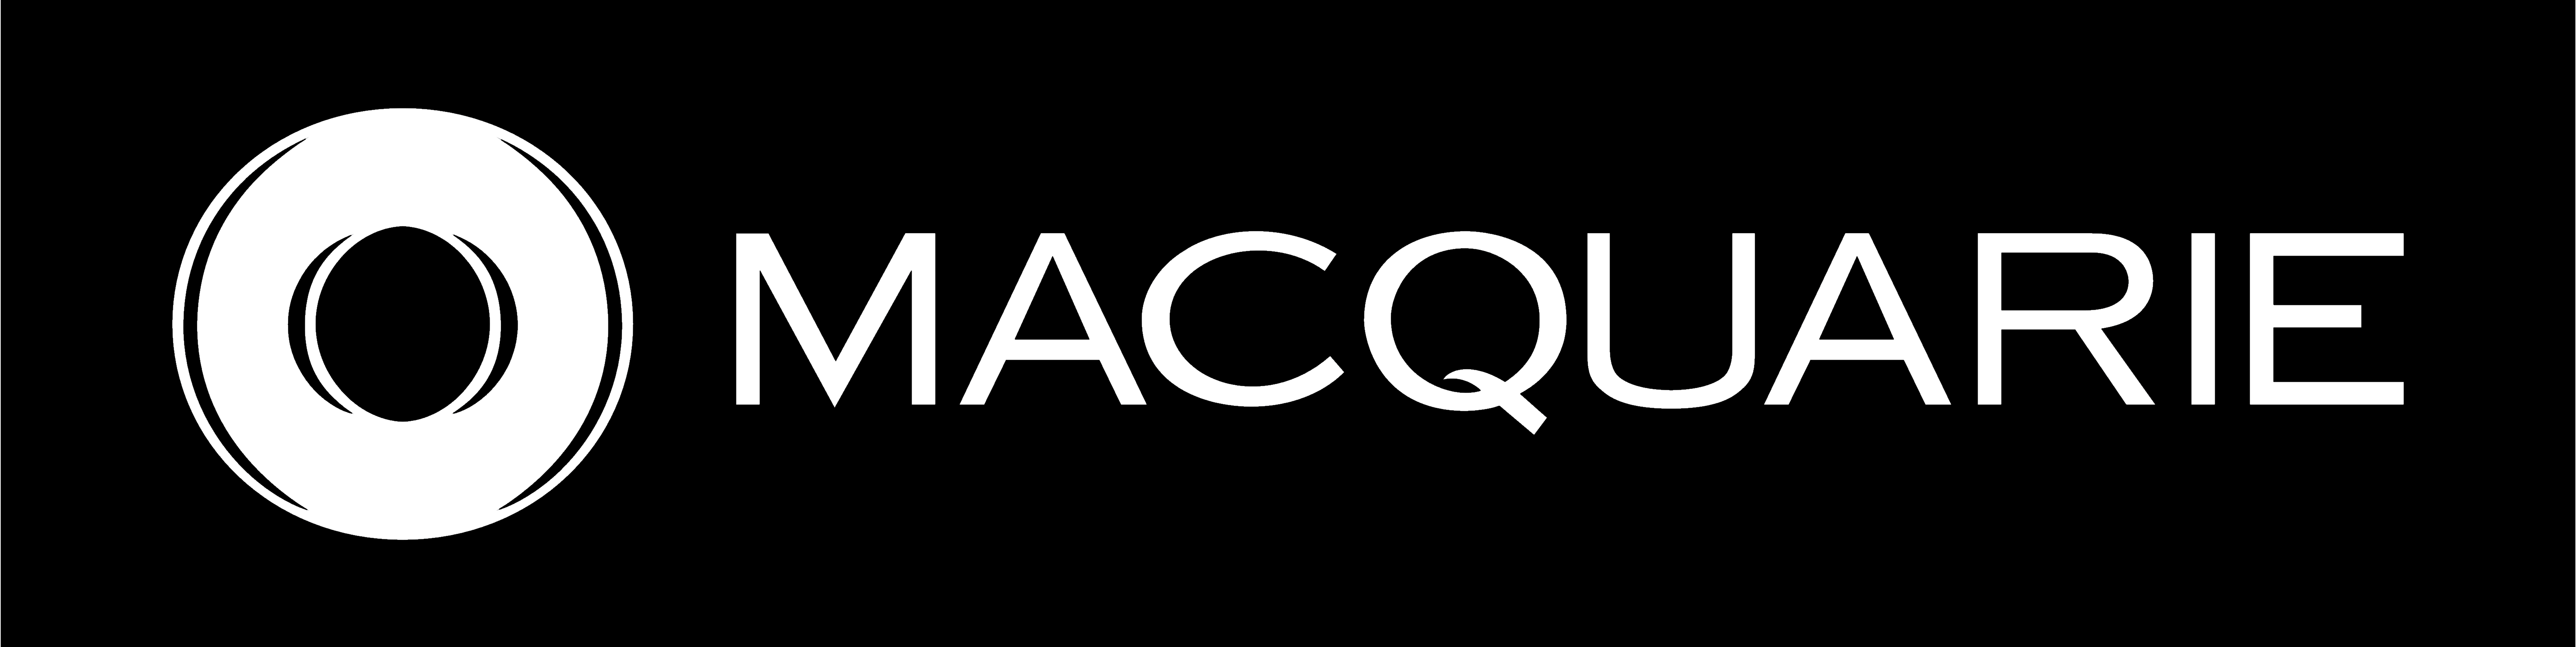 Macquarie Group Logo, Black - Macquarie Vector, Transparent background PNG HD thumbnail